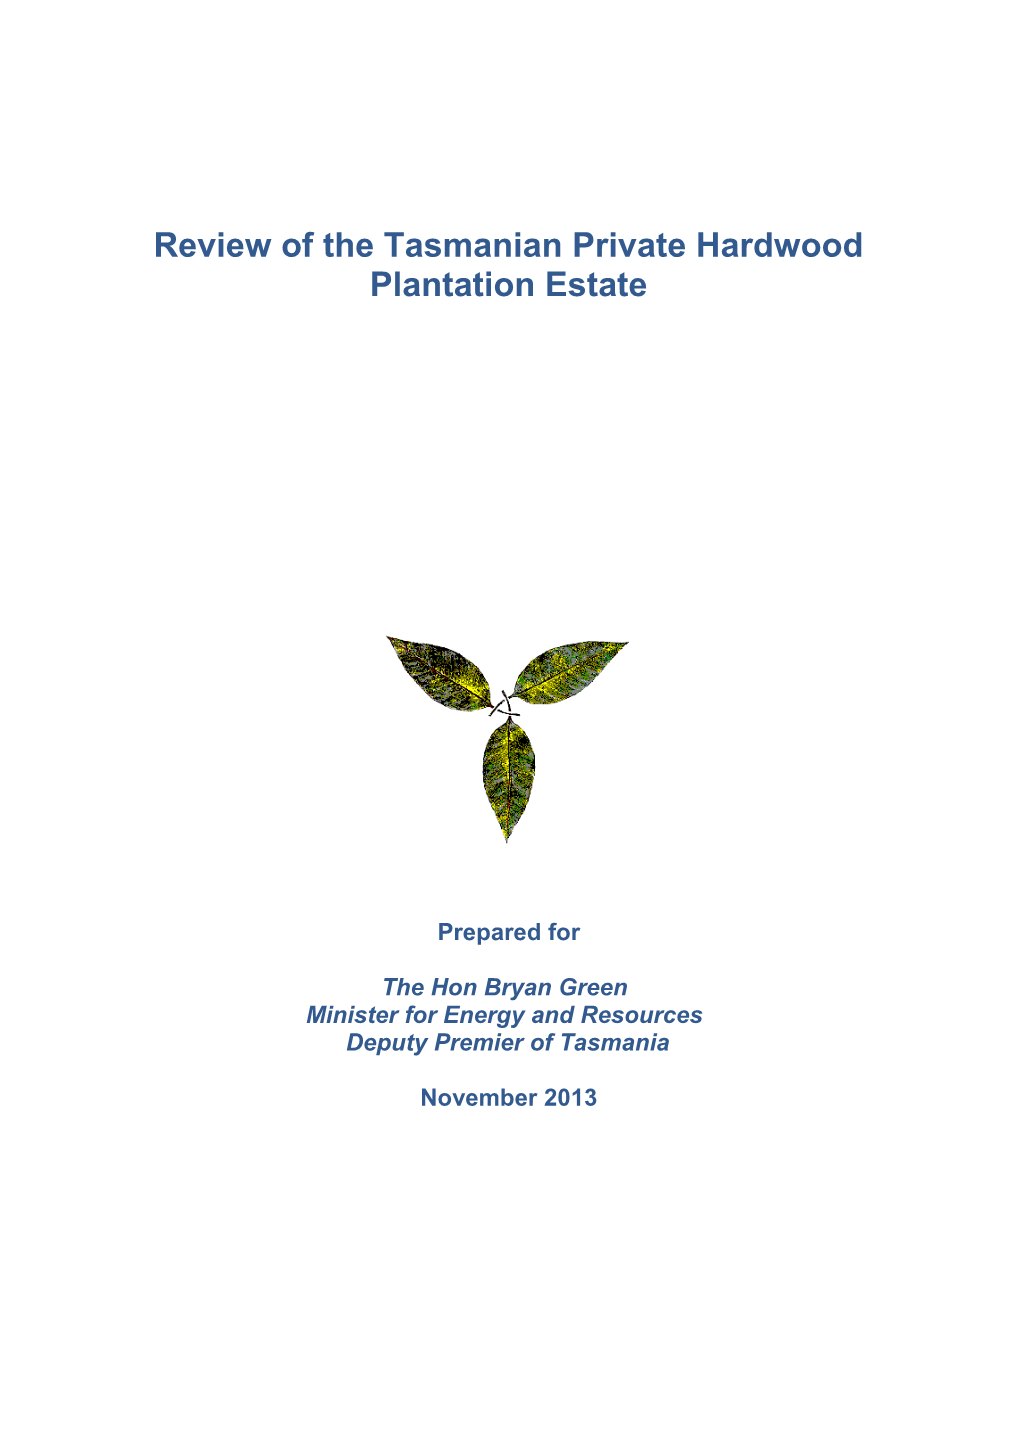 Review of the Tasmanian Private Hardwood Plantation Estate